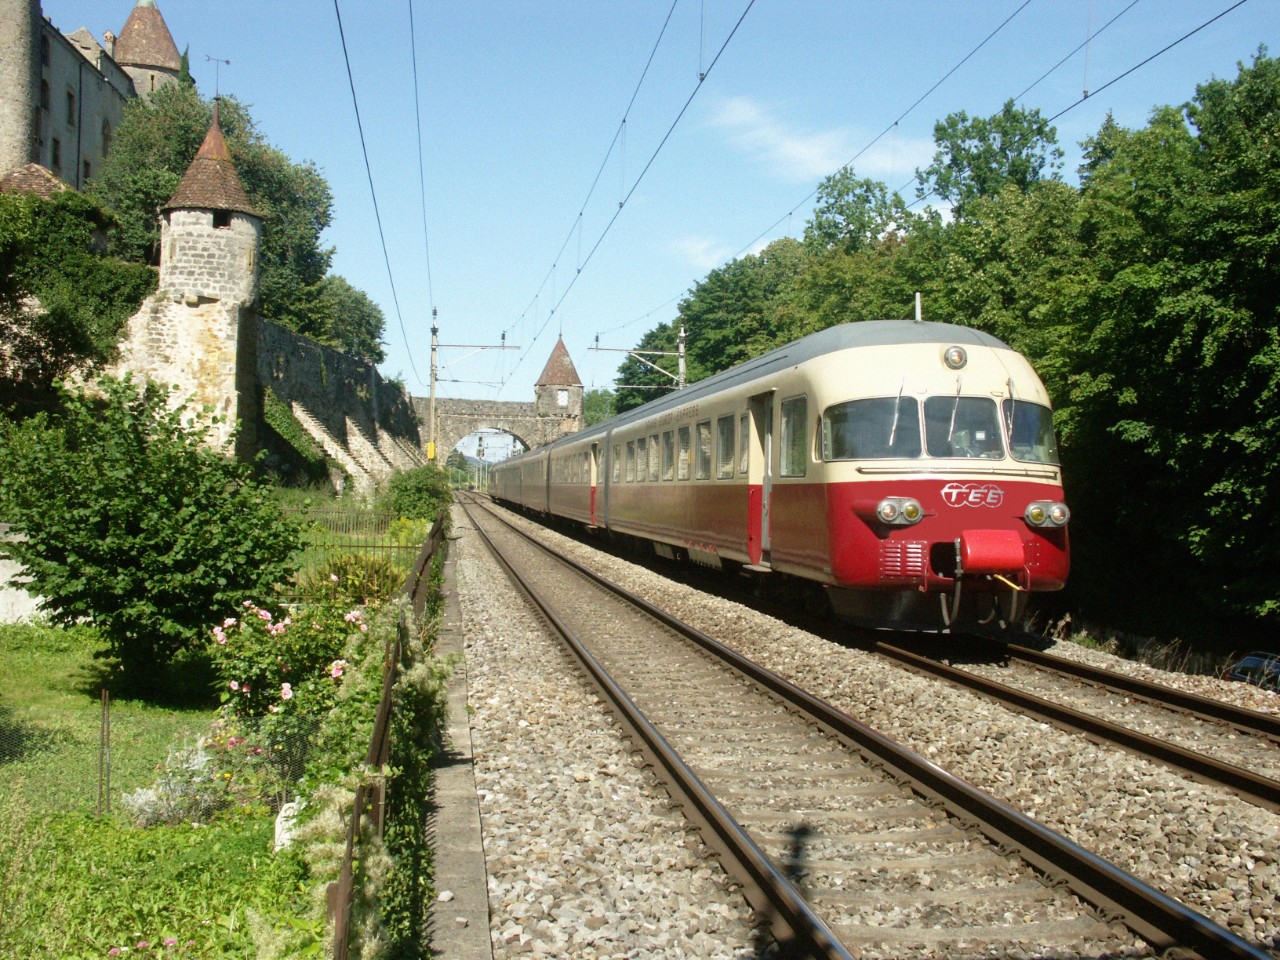 The Trans Europ Express during a journey past Grandson Castle.